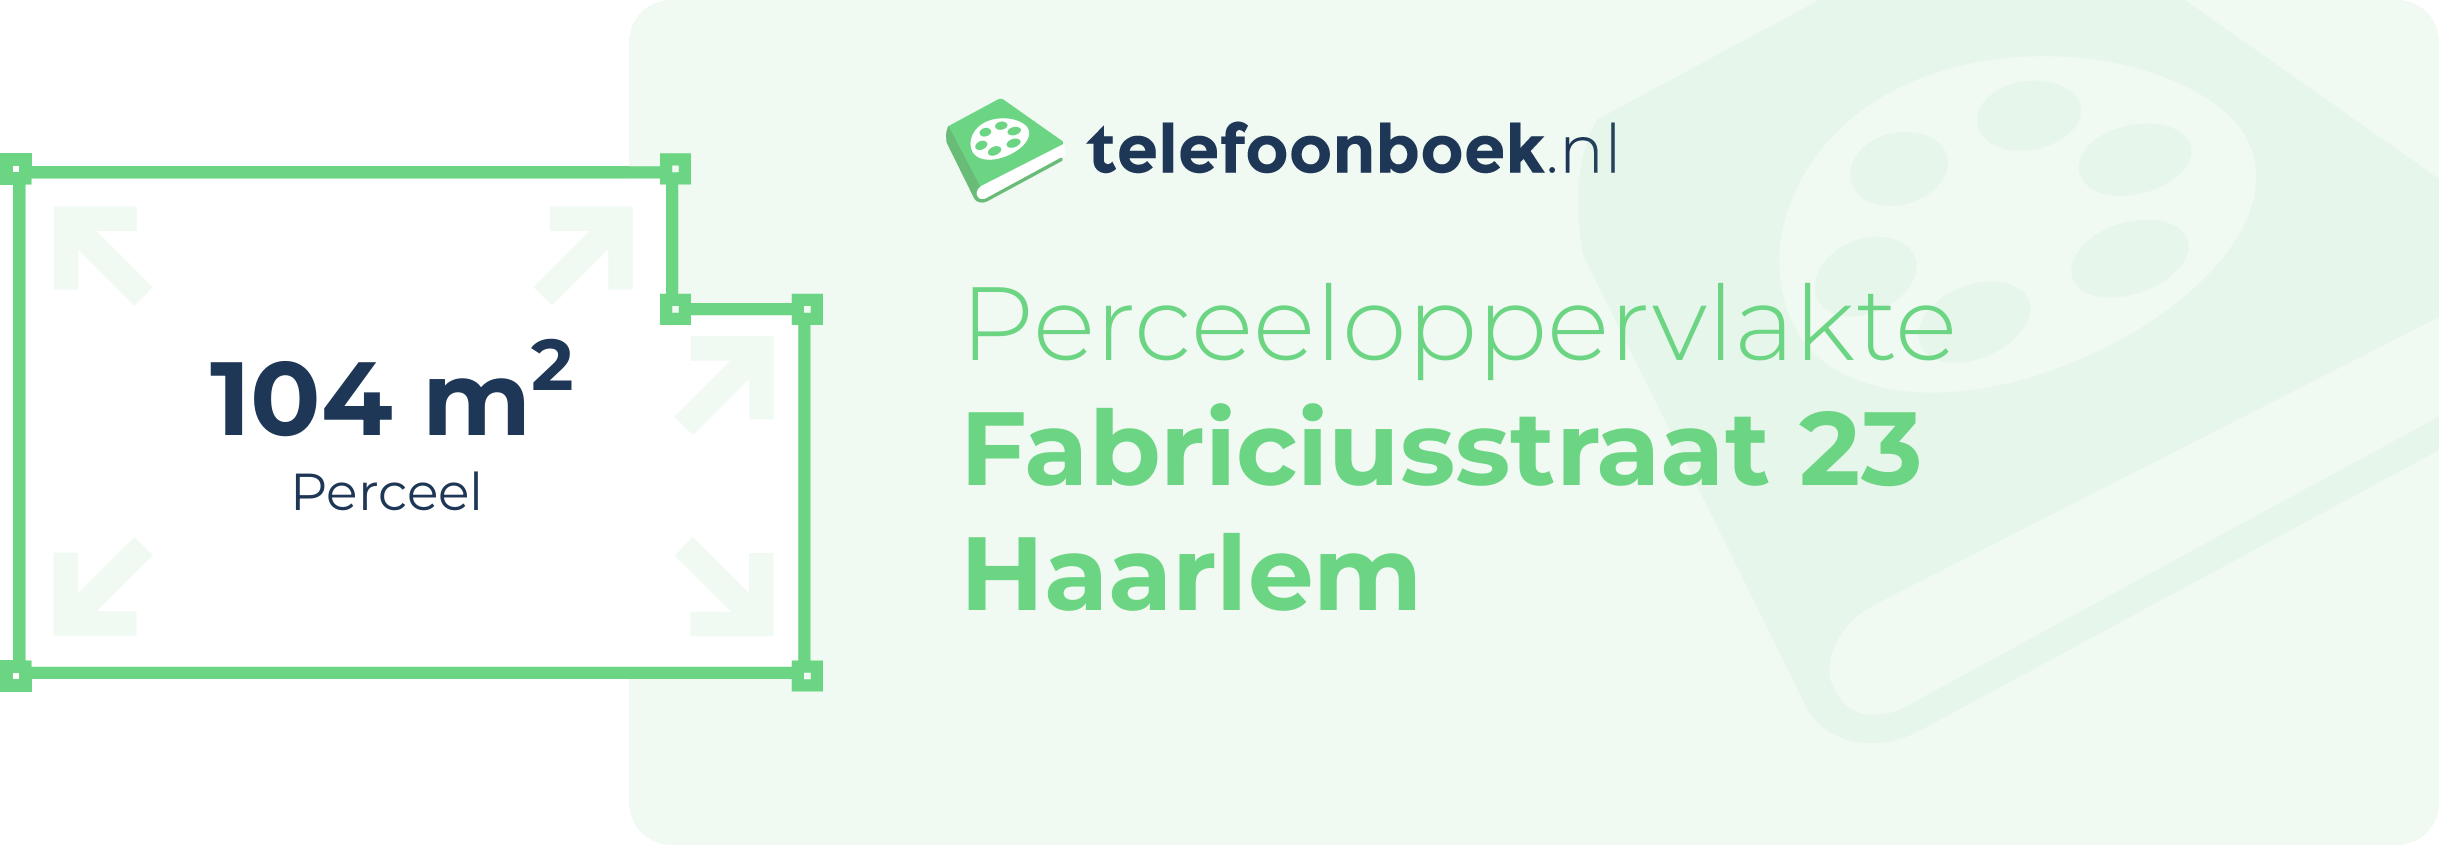 Perceeloppervlakte Fabriciusstraat 23 Haarlem